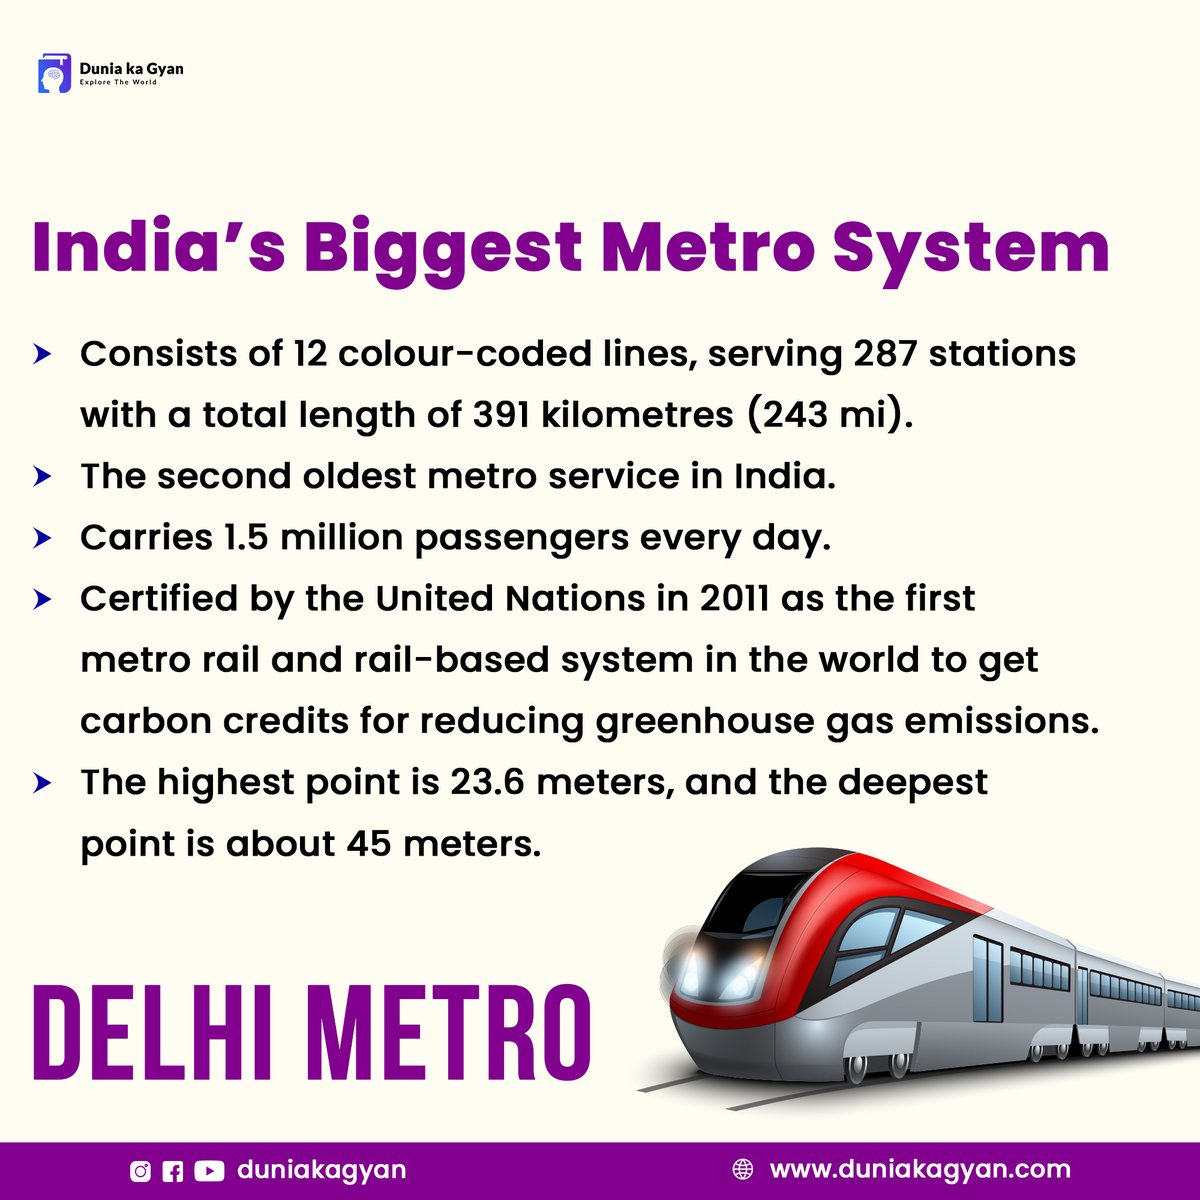 India's Biggest Metro System.
.
#delhimetro #delhincr #delhifashionblogger #delhistreetfood #delhite #delhibloggers #indiagate #delhiuniversity #delhiwale #delhidaily #delhishopping #delhiphotography #delhiscenes #delhigirl #southdelhi #delhites #delhilife